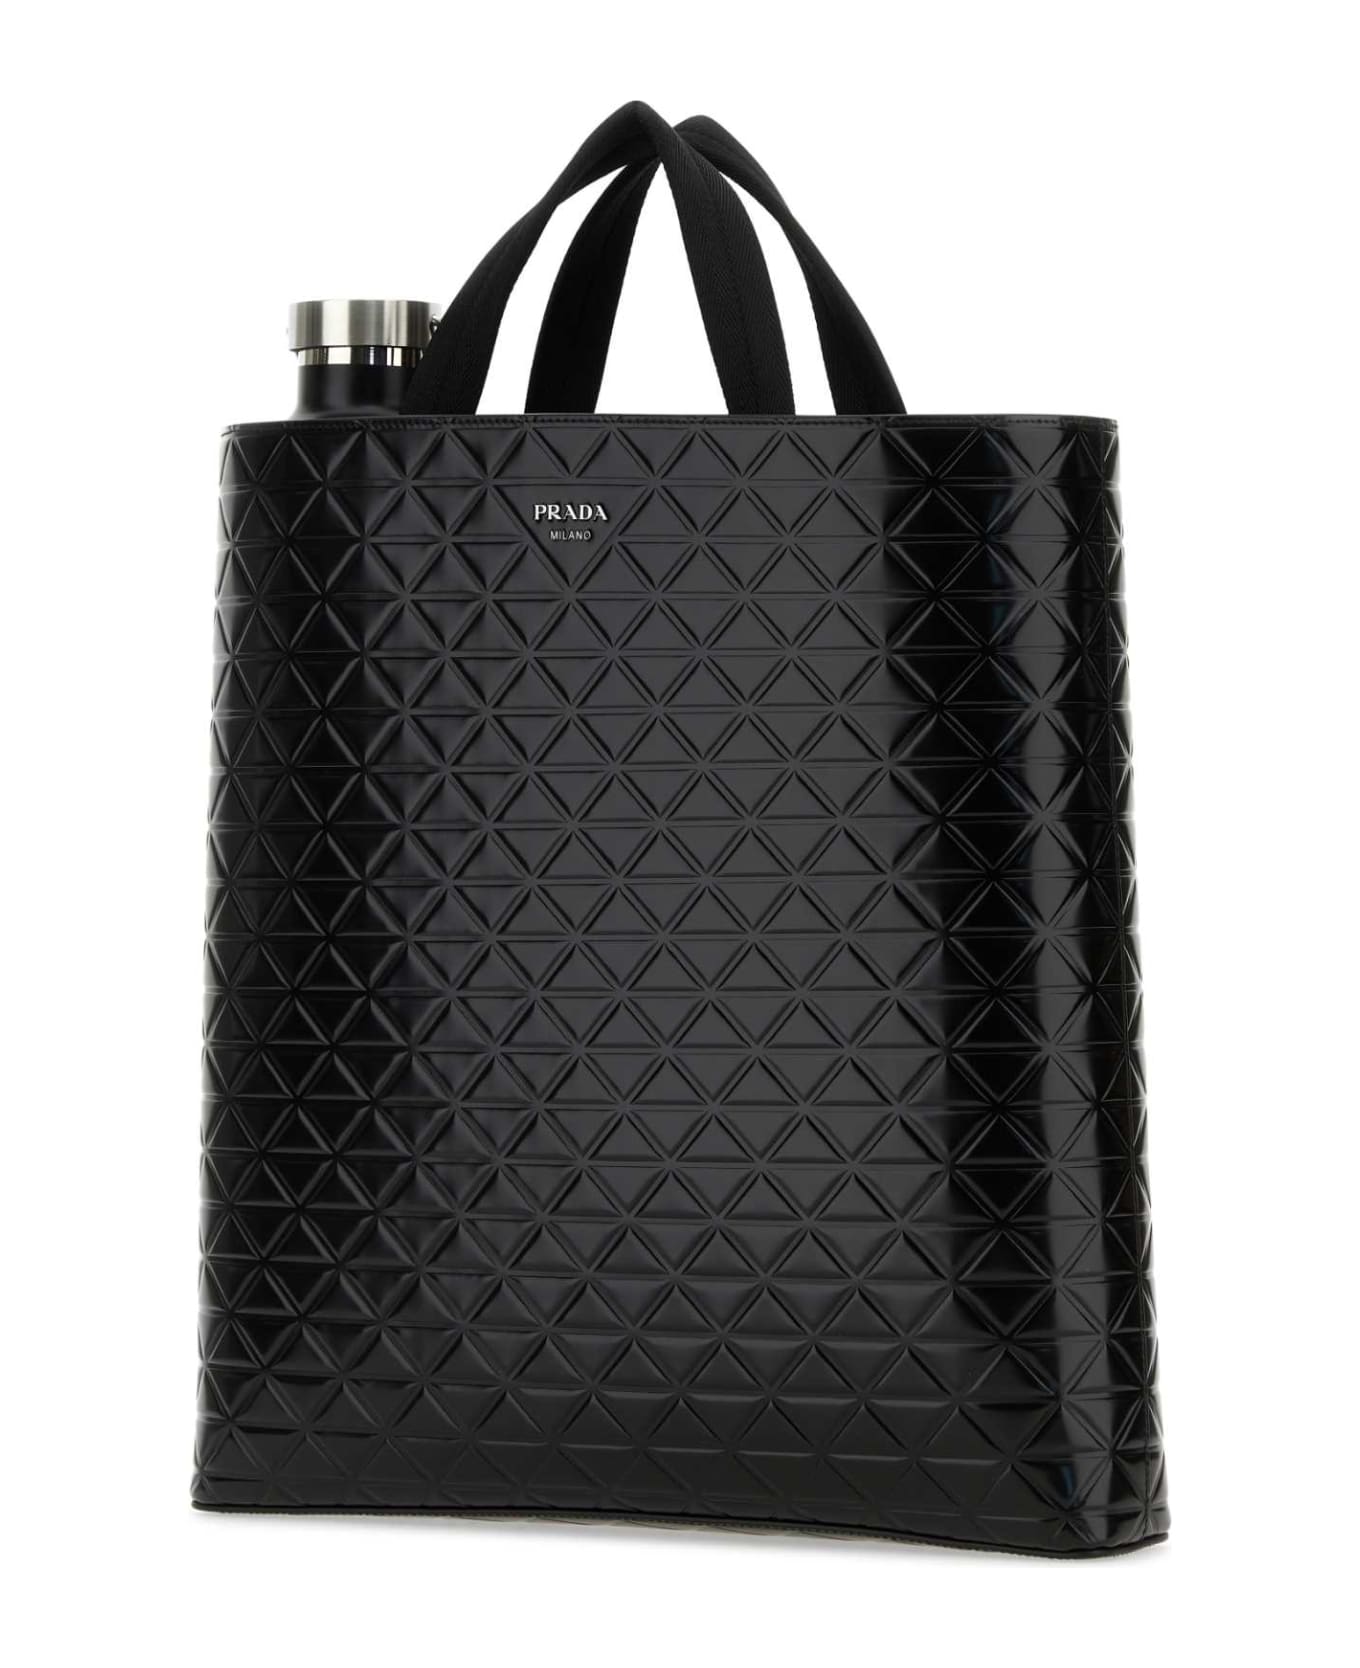 Prada Black Leather Shopping Bag - NERO トートバッグ